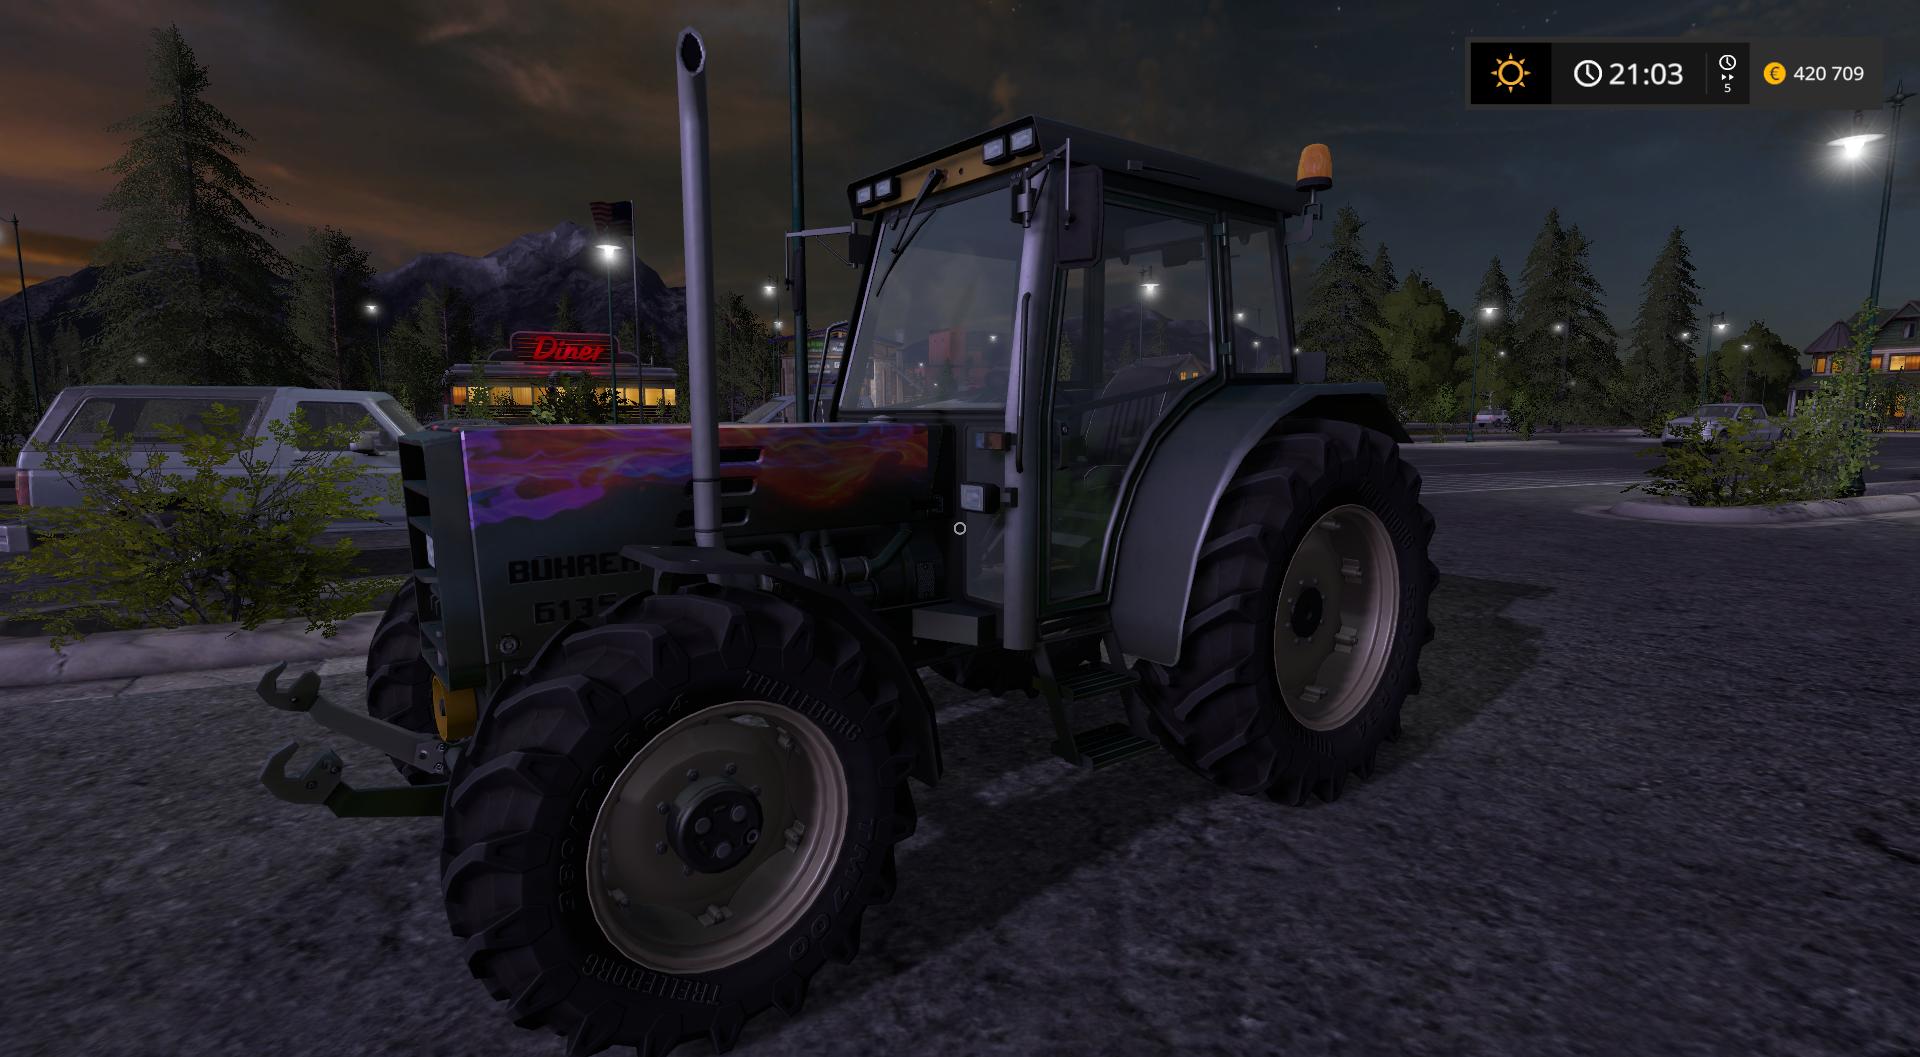 Tractor V8 V1 Fs17 Farming Simulator 17 Mod Fs 2017 Mod